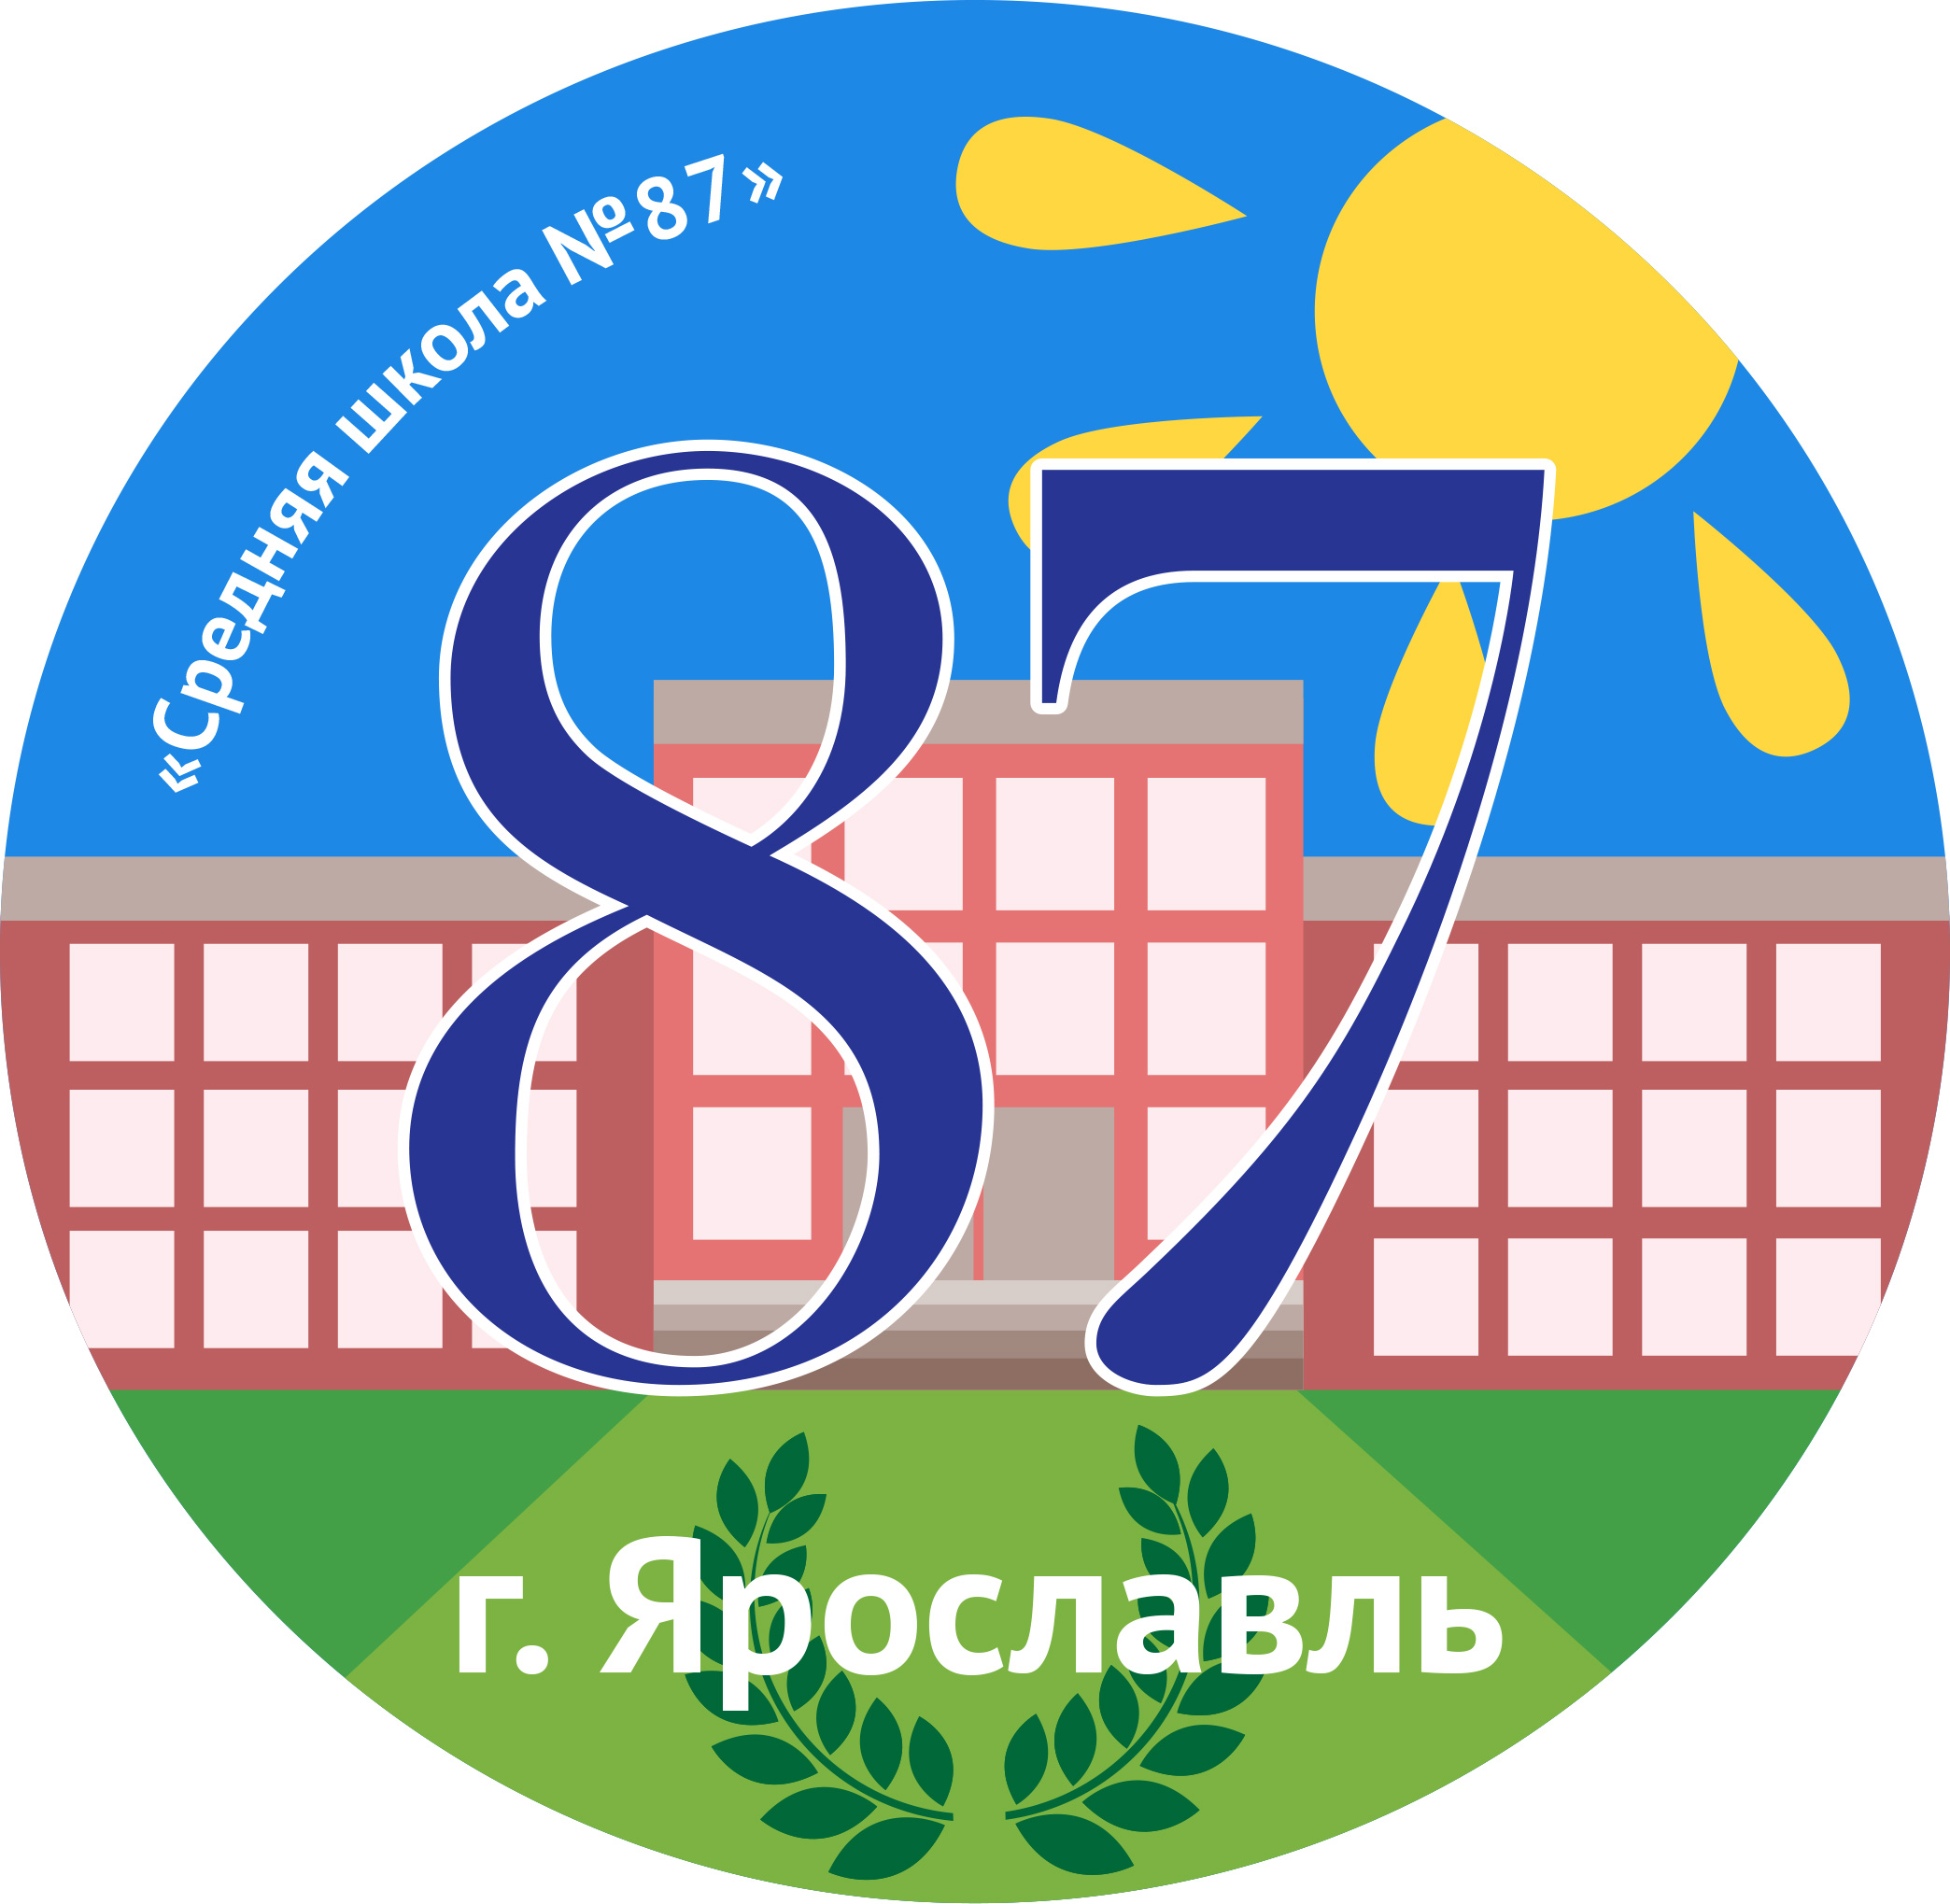 Школа 87 задания. Школа номер 87 Ярославль. Логотип школы. Эмблема школы 87. Эмблемы ярославских школ.